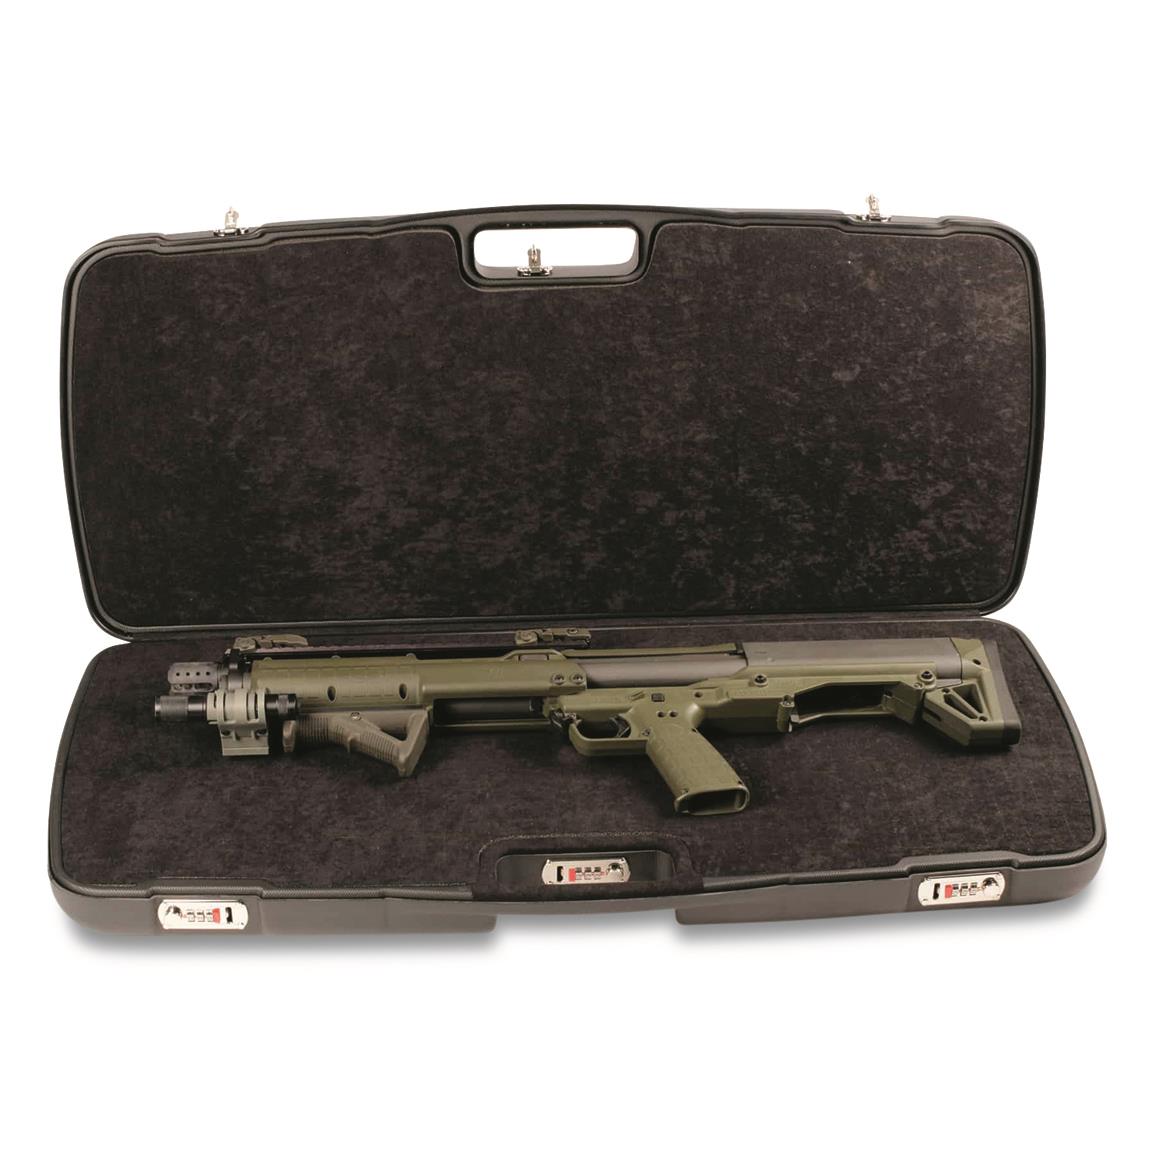 Fits any takedown AR-15, tactical shotgun, airgun or pistol-caliber carbine